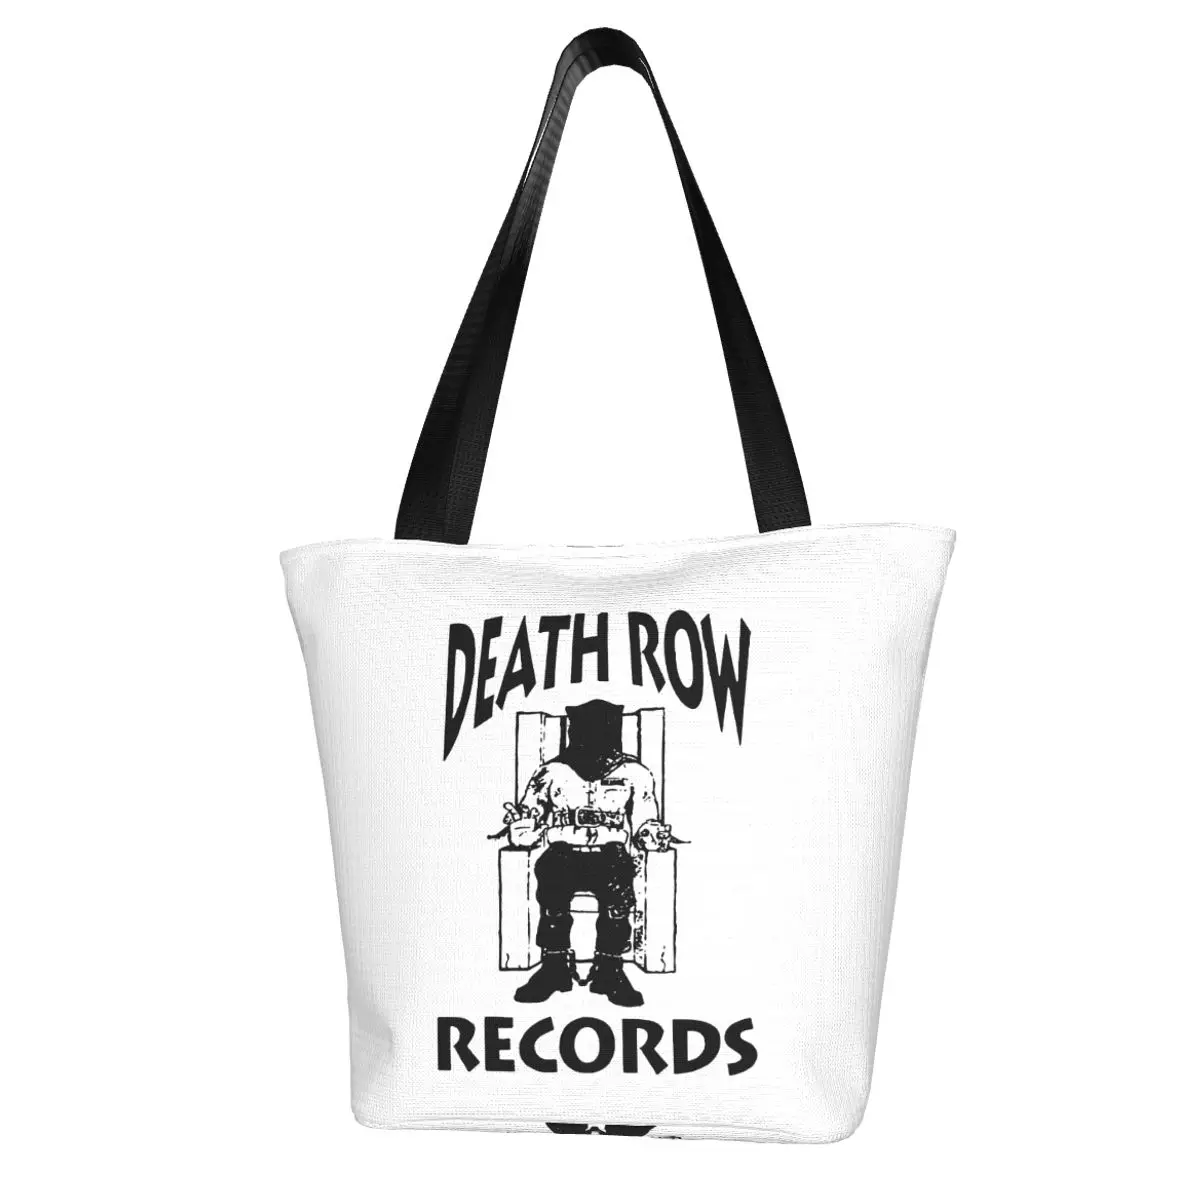 Death Row Records Black Shopping Bag Aesthetic Cloth Outdoor Handbag Female Fashion Bags